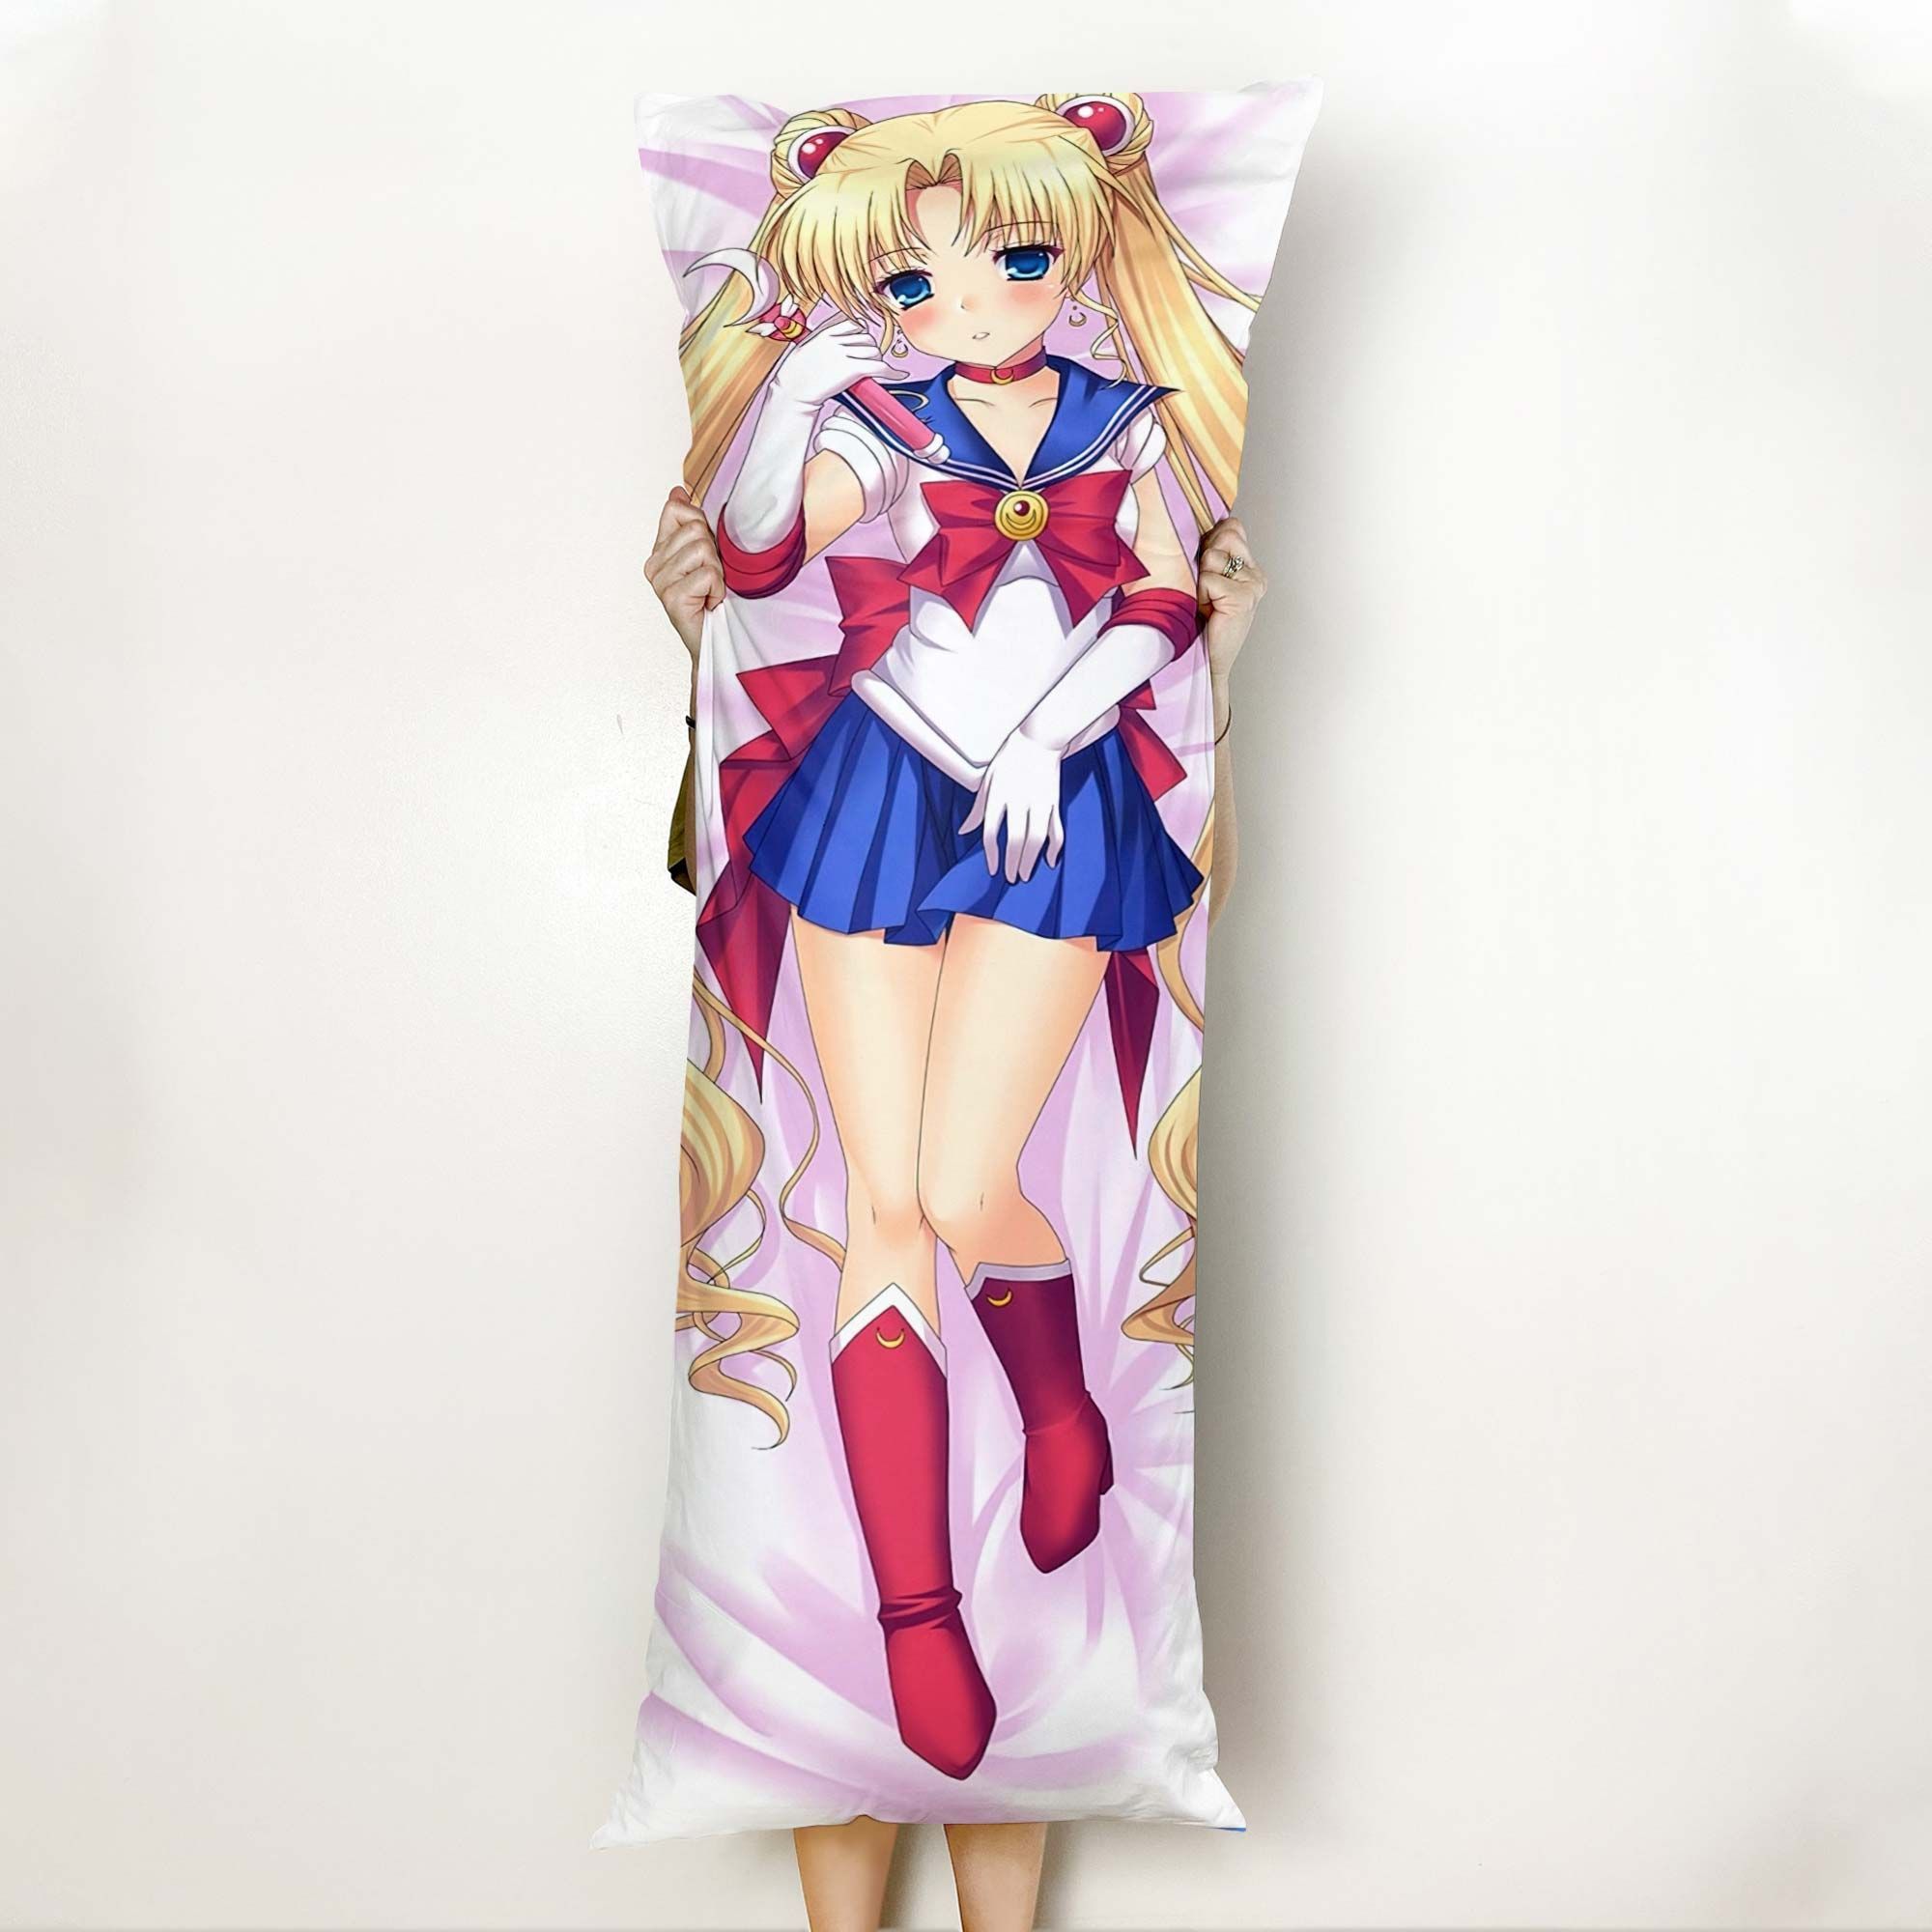 Sailor Moon Usagi Tsukino Body Pillow Dakimakura Cover Anime For Fans Girl OT2102